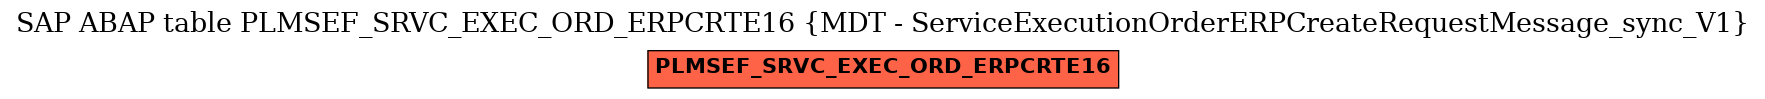 E-R Diagram for table PLMSEF_SRVC_EXEC_ORD_ERPCRTE16 (MDT - ServiceExecutionOrderERPCreateRequestMessage_sync_V1)